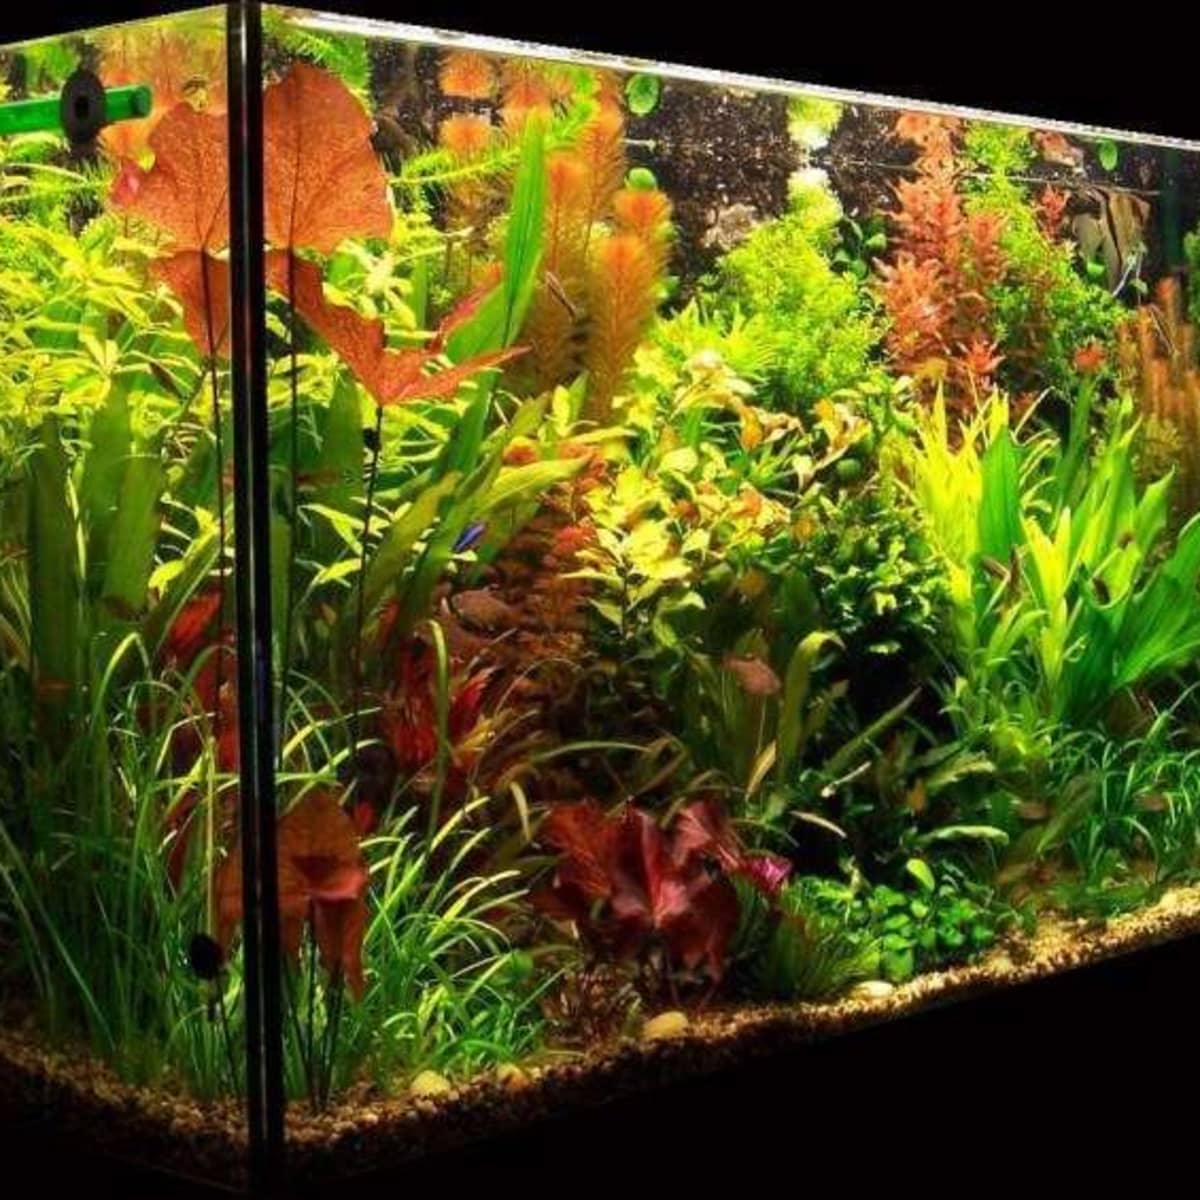 Carefree Fish 1.2Gallon Fish Tank Office USB Small Betta Aquarium LED Light  with Filter No